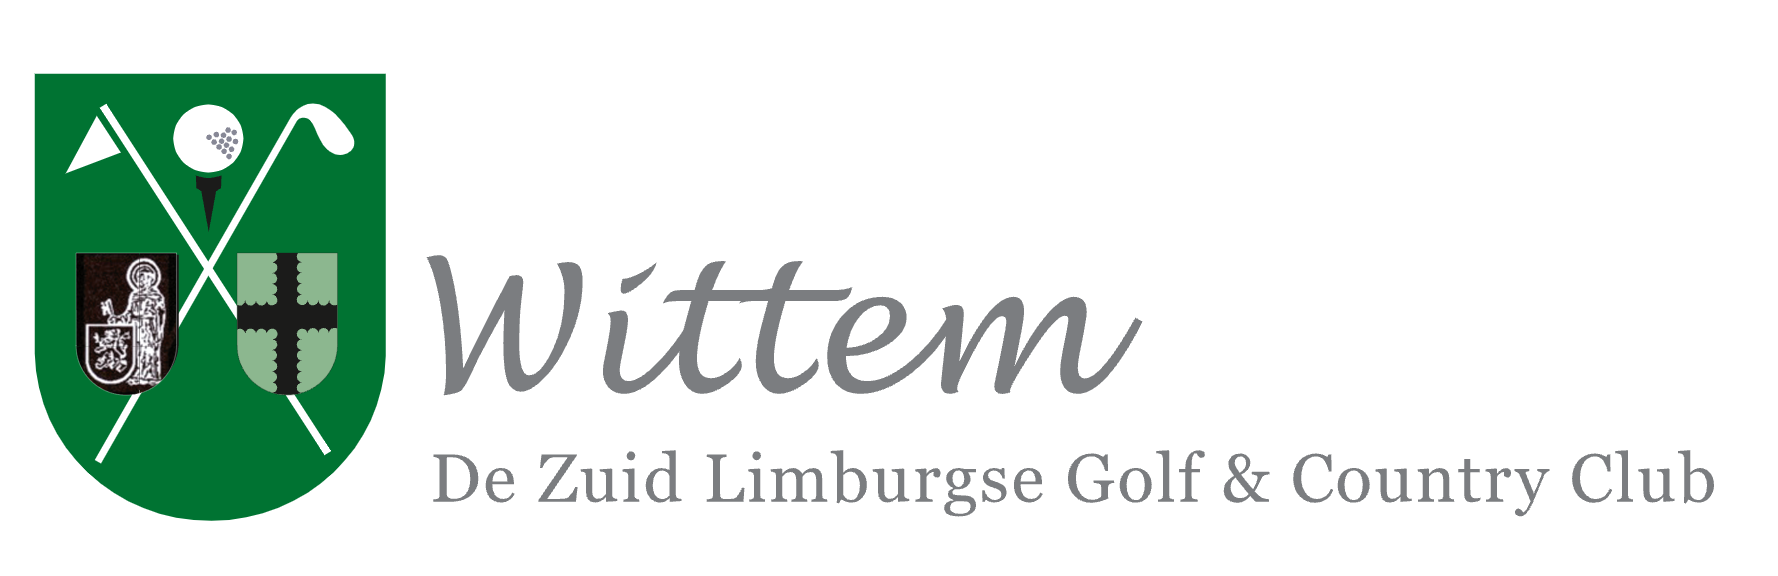 De Zuid Limburgse Golf & Country Club Wittem - Logo